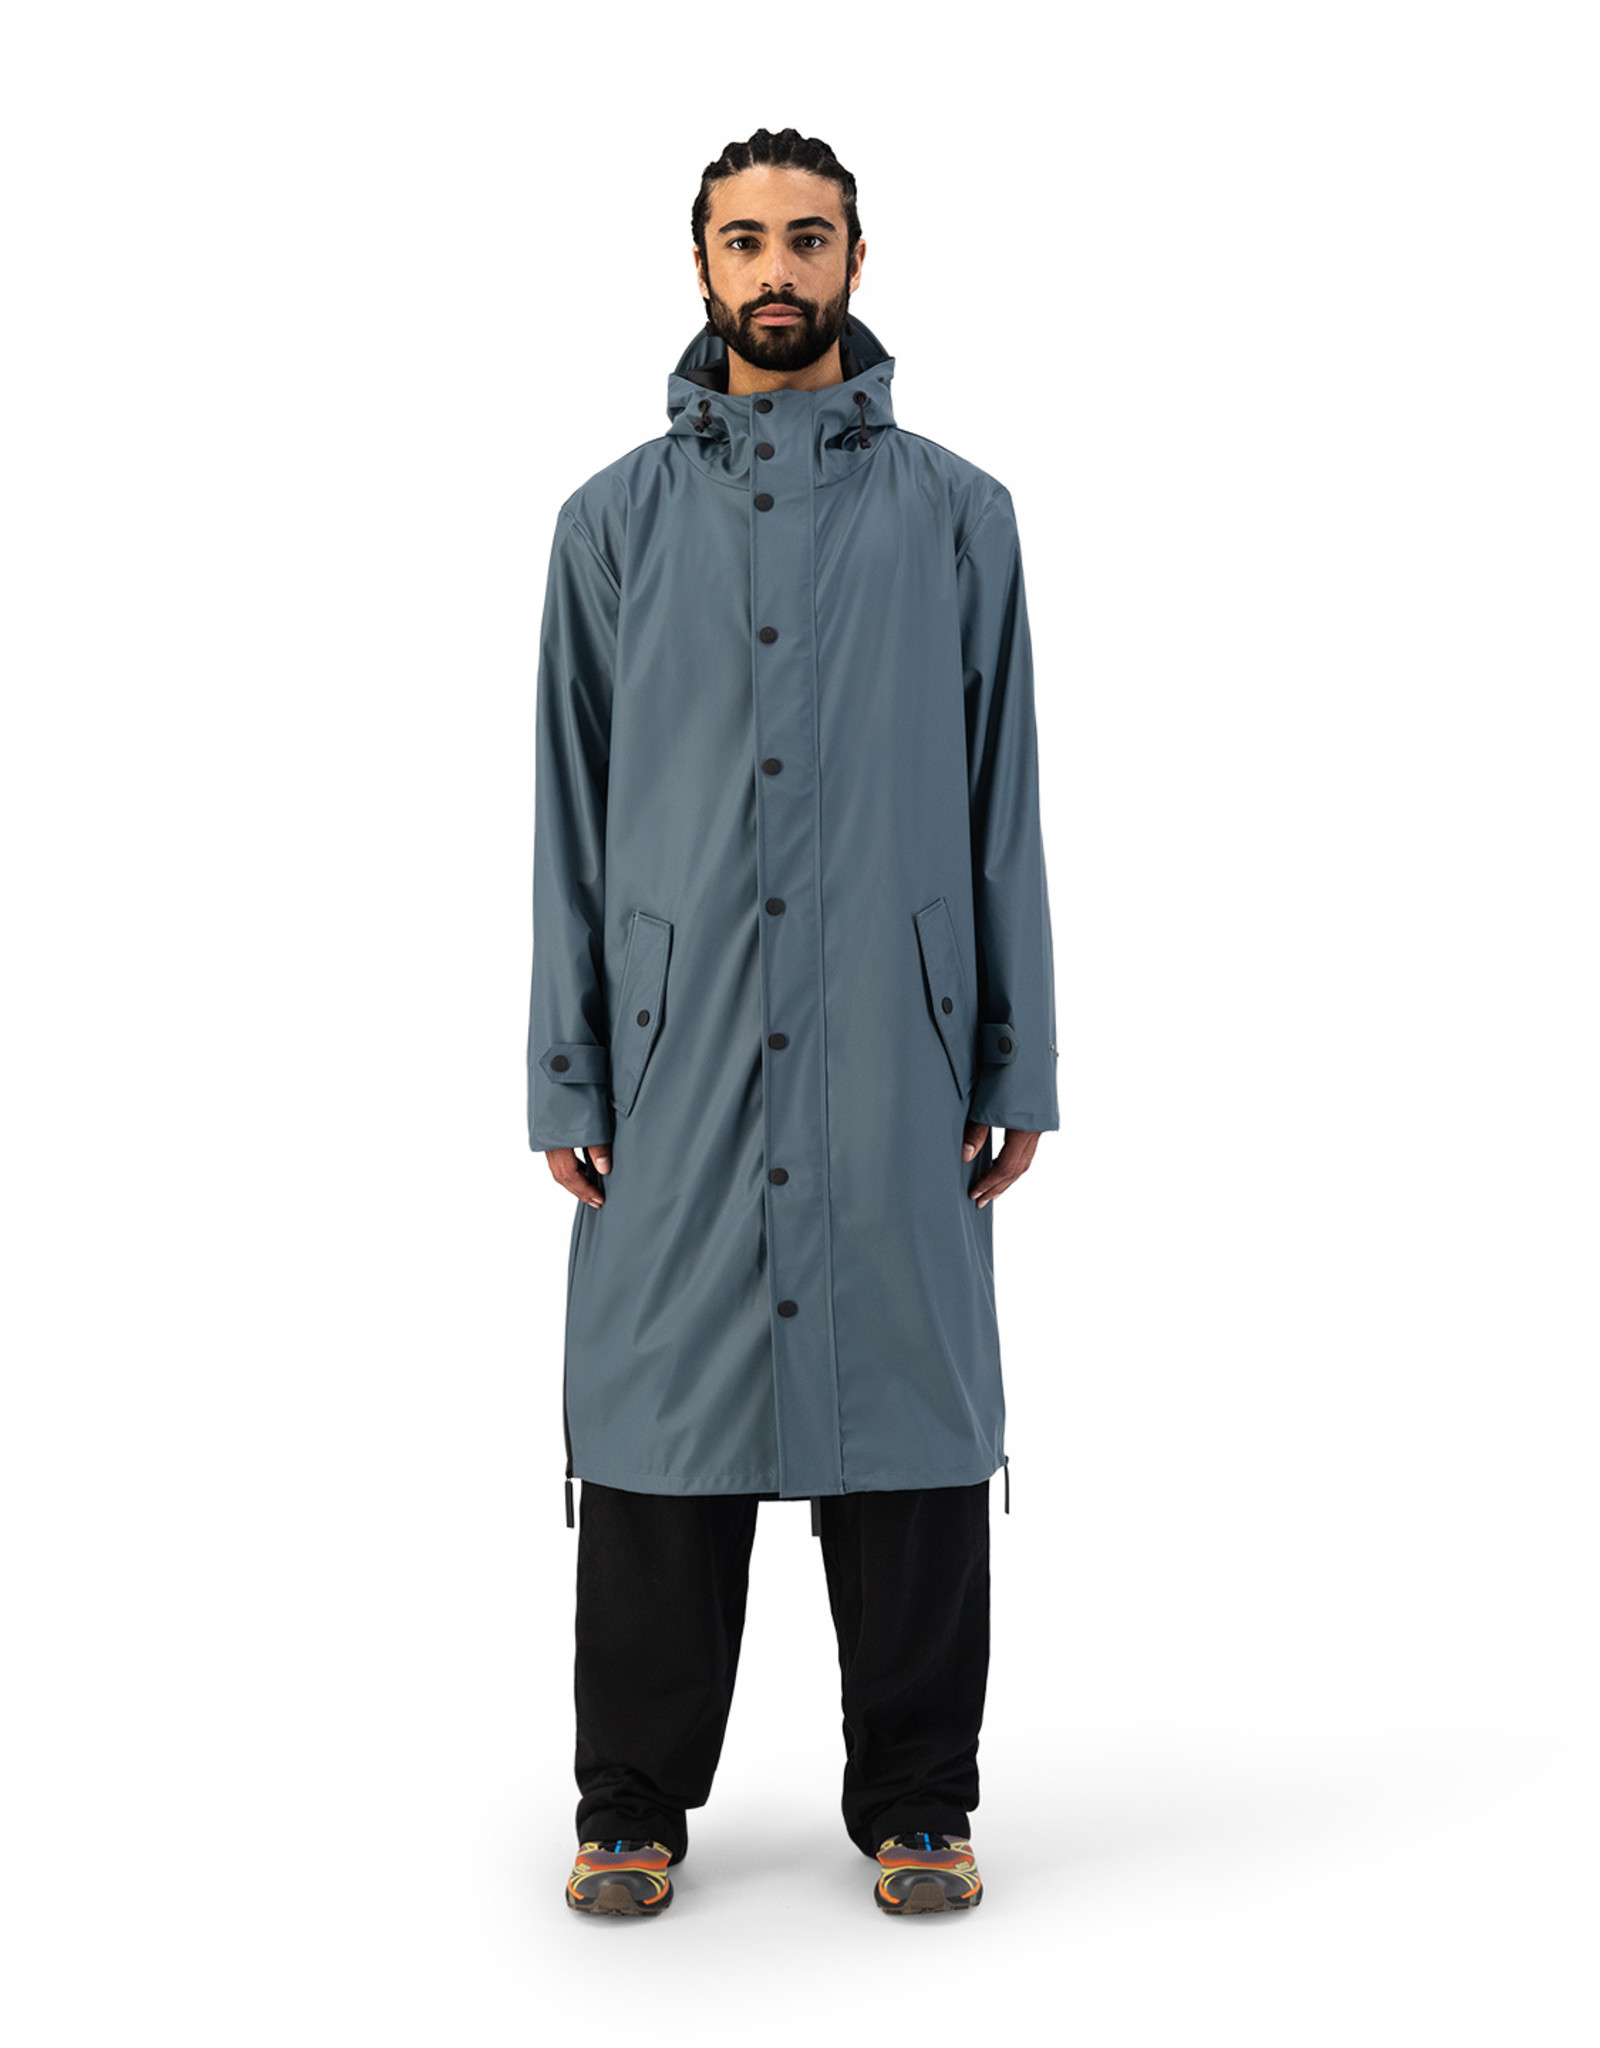 Maium raincoat / poncho 'Original'  - blue grey